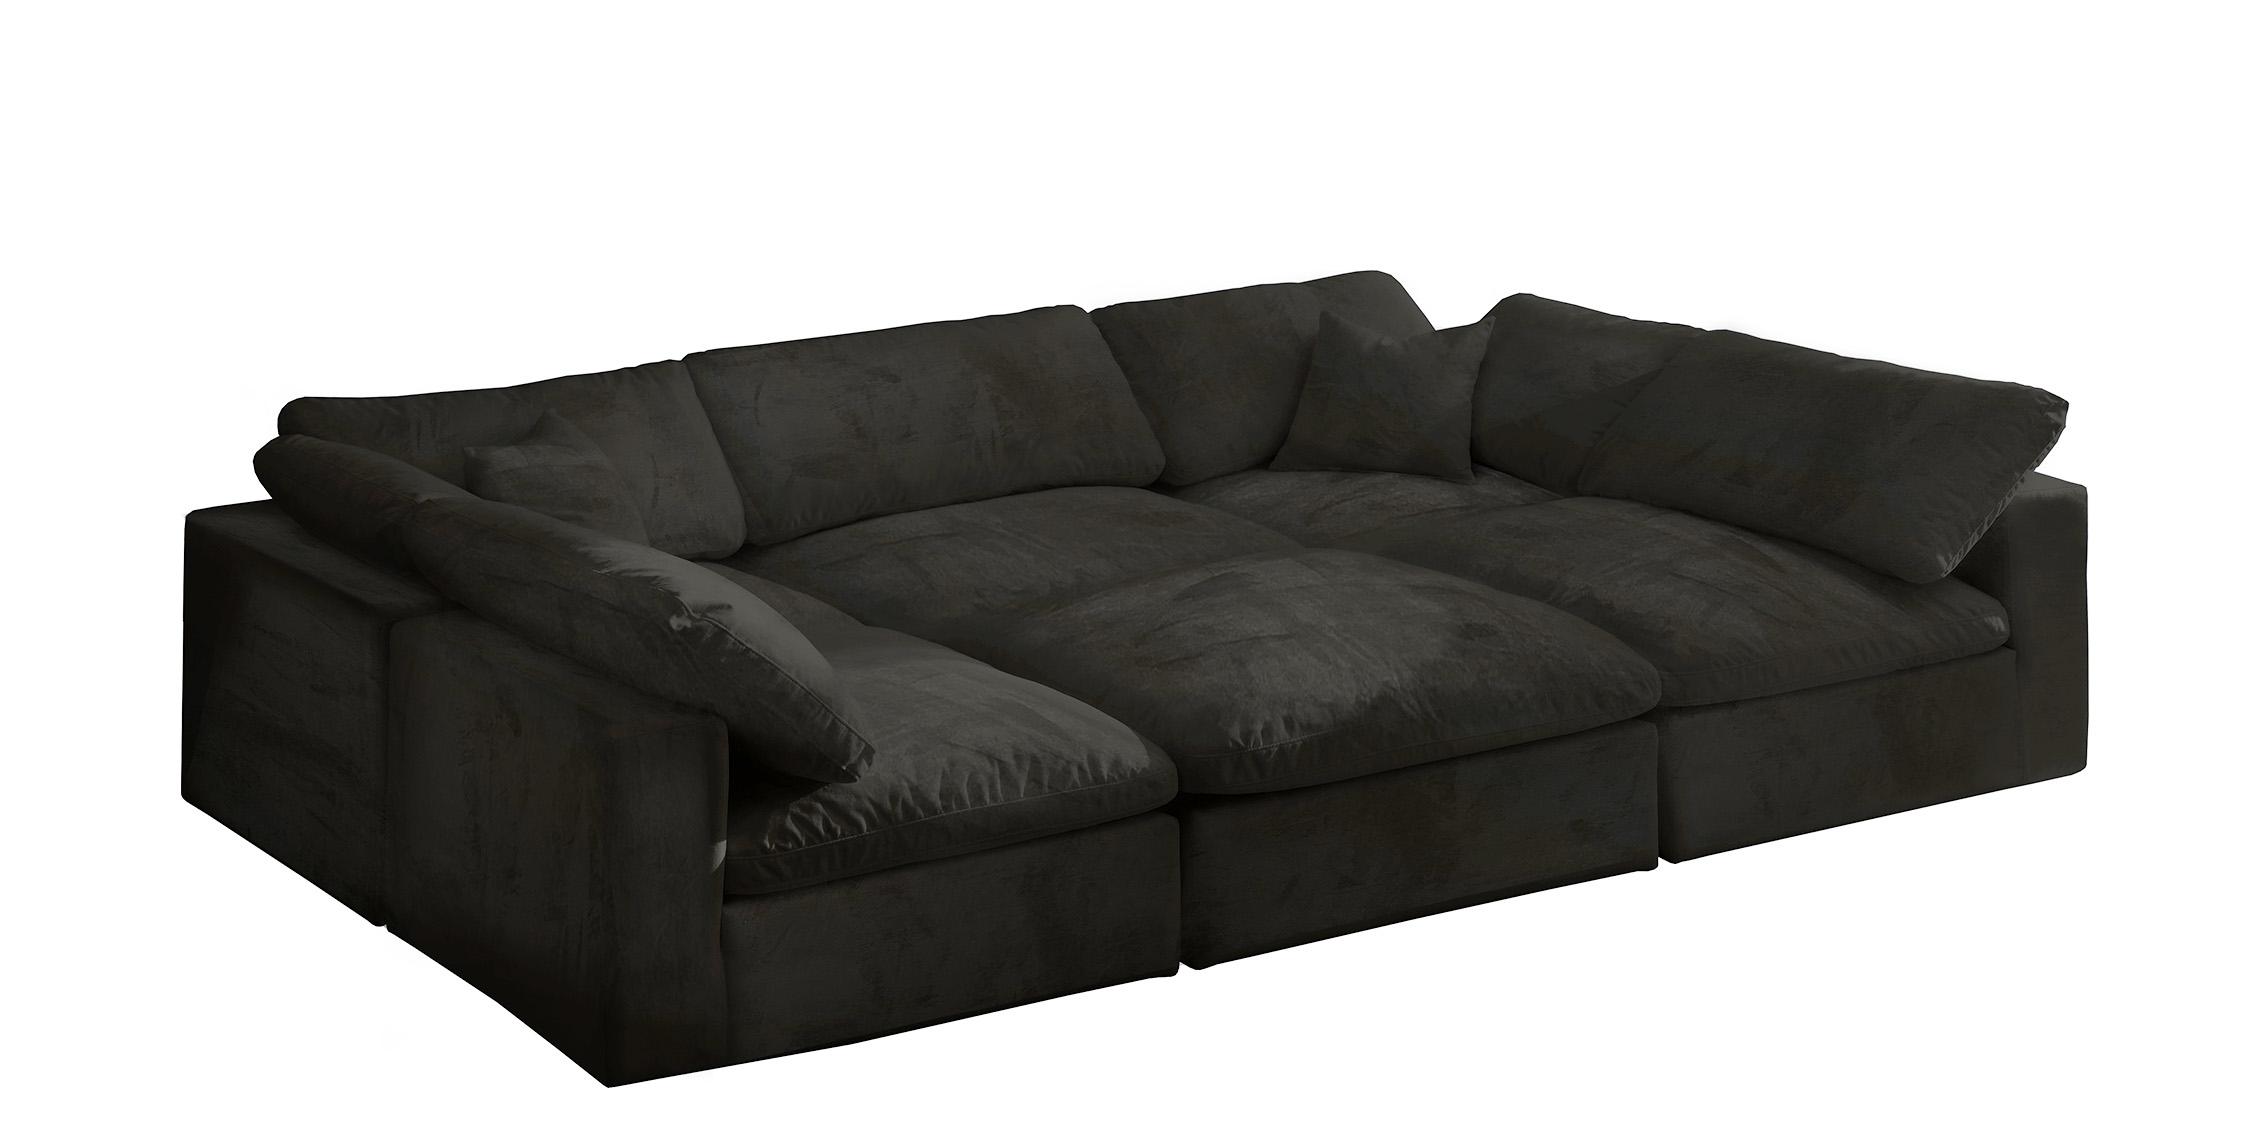 Contemporary, Modern Modular Sectional Sofa 634Black-Sec6C 634Black-Sec6C in Black Fabric